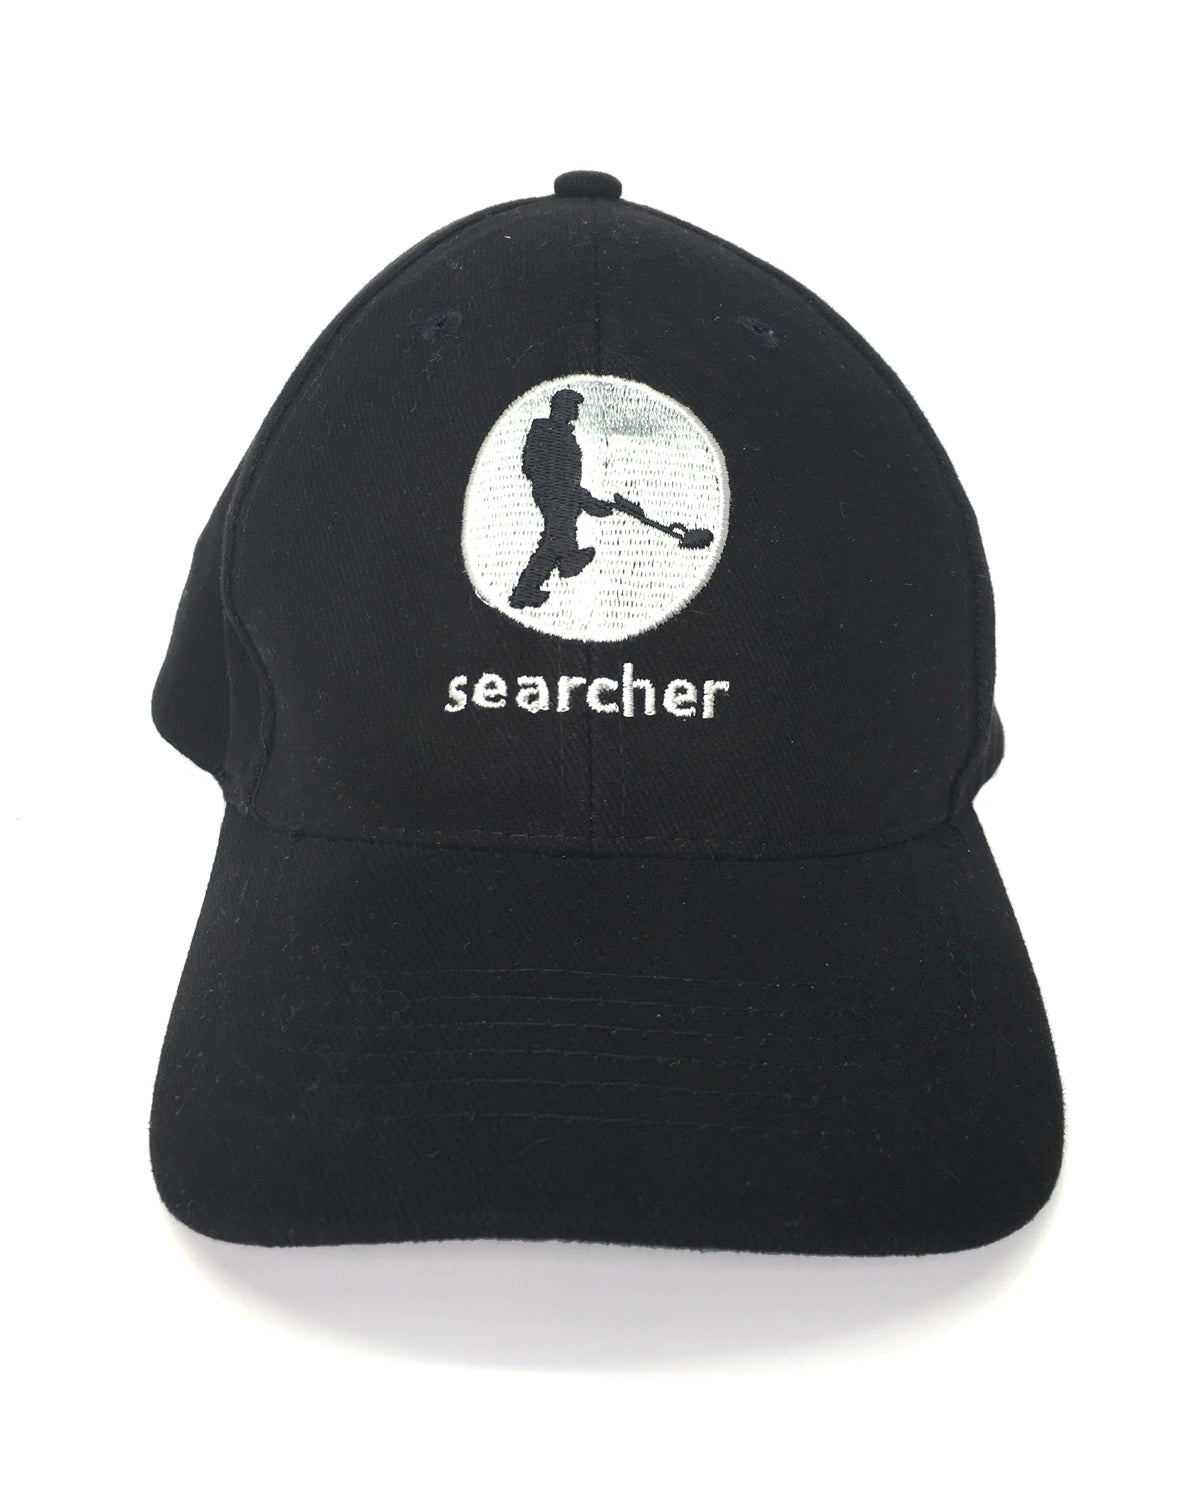 Searcher baseball cap